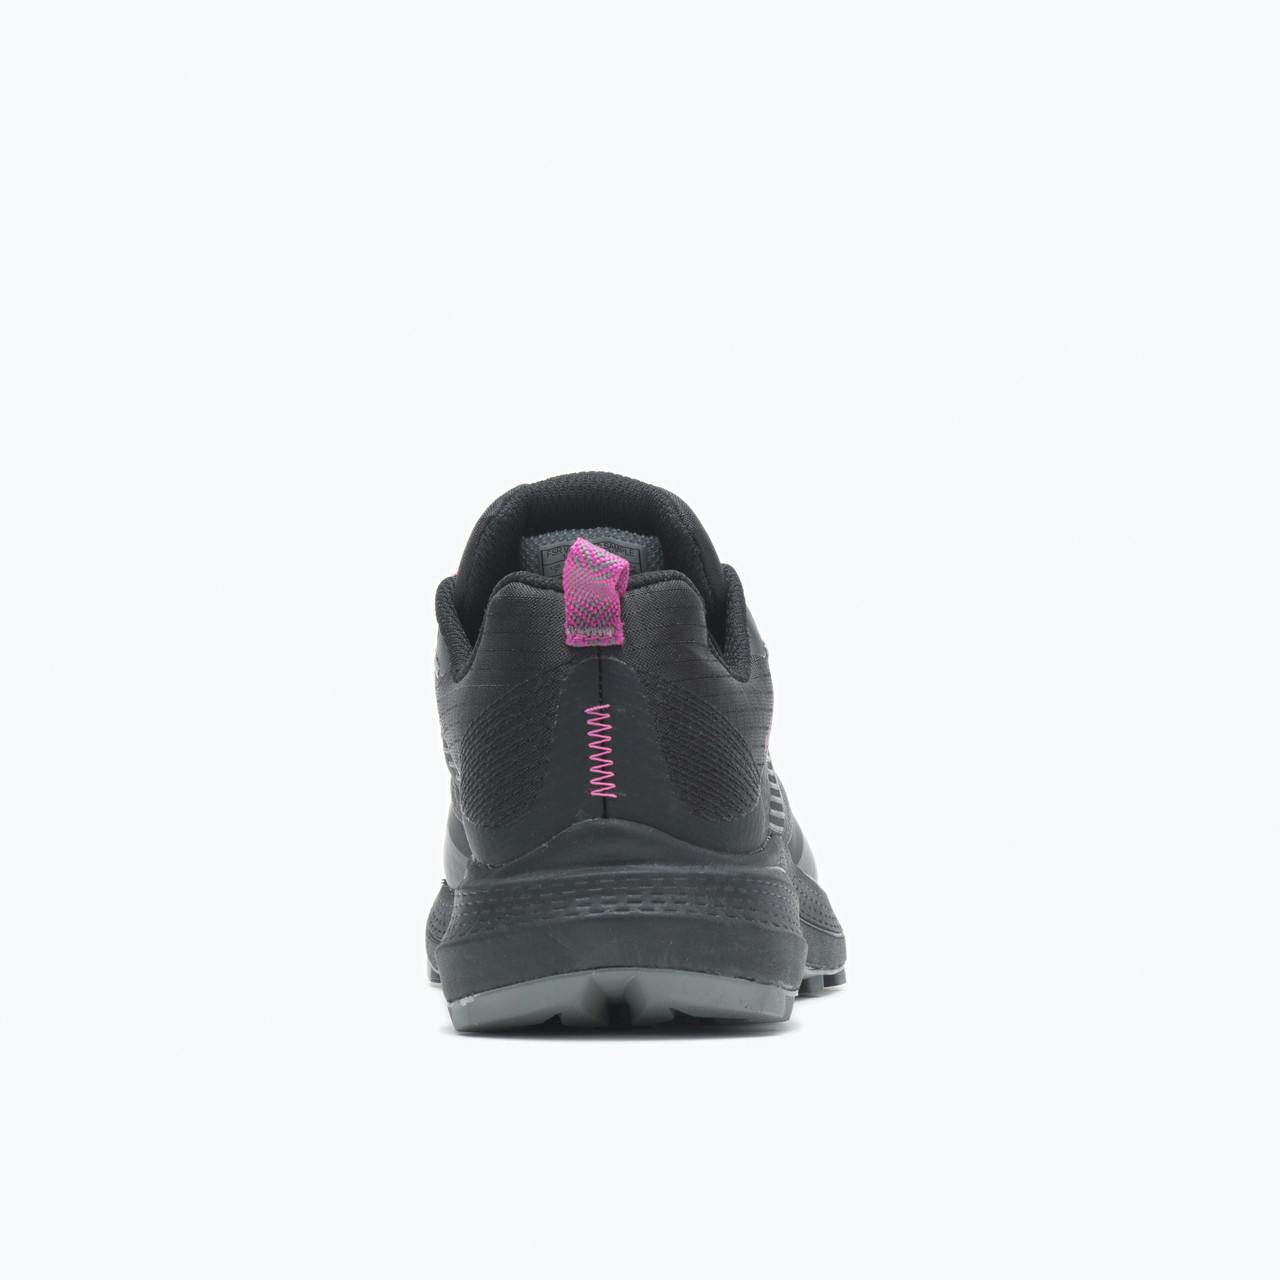 Chaussures de courte randonnée MQM 3 GTX Noir/Fuchsia